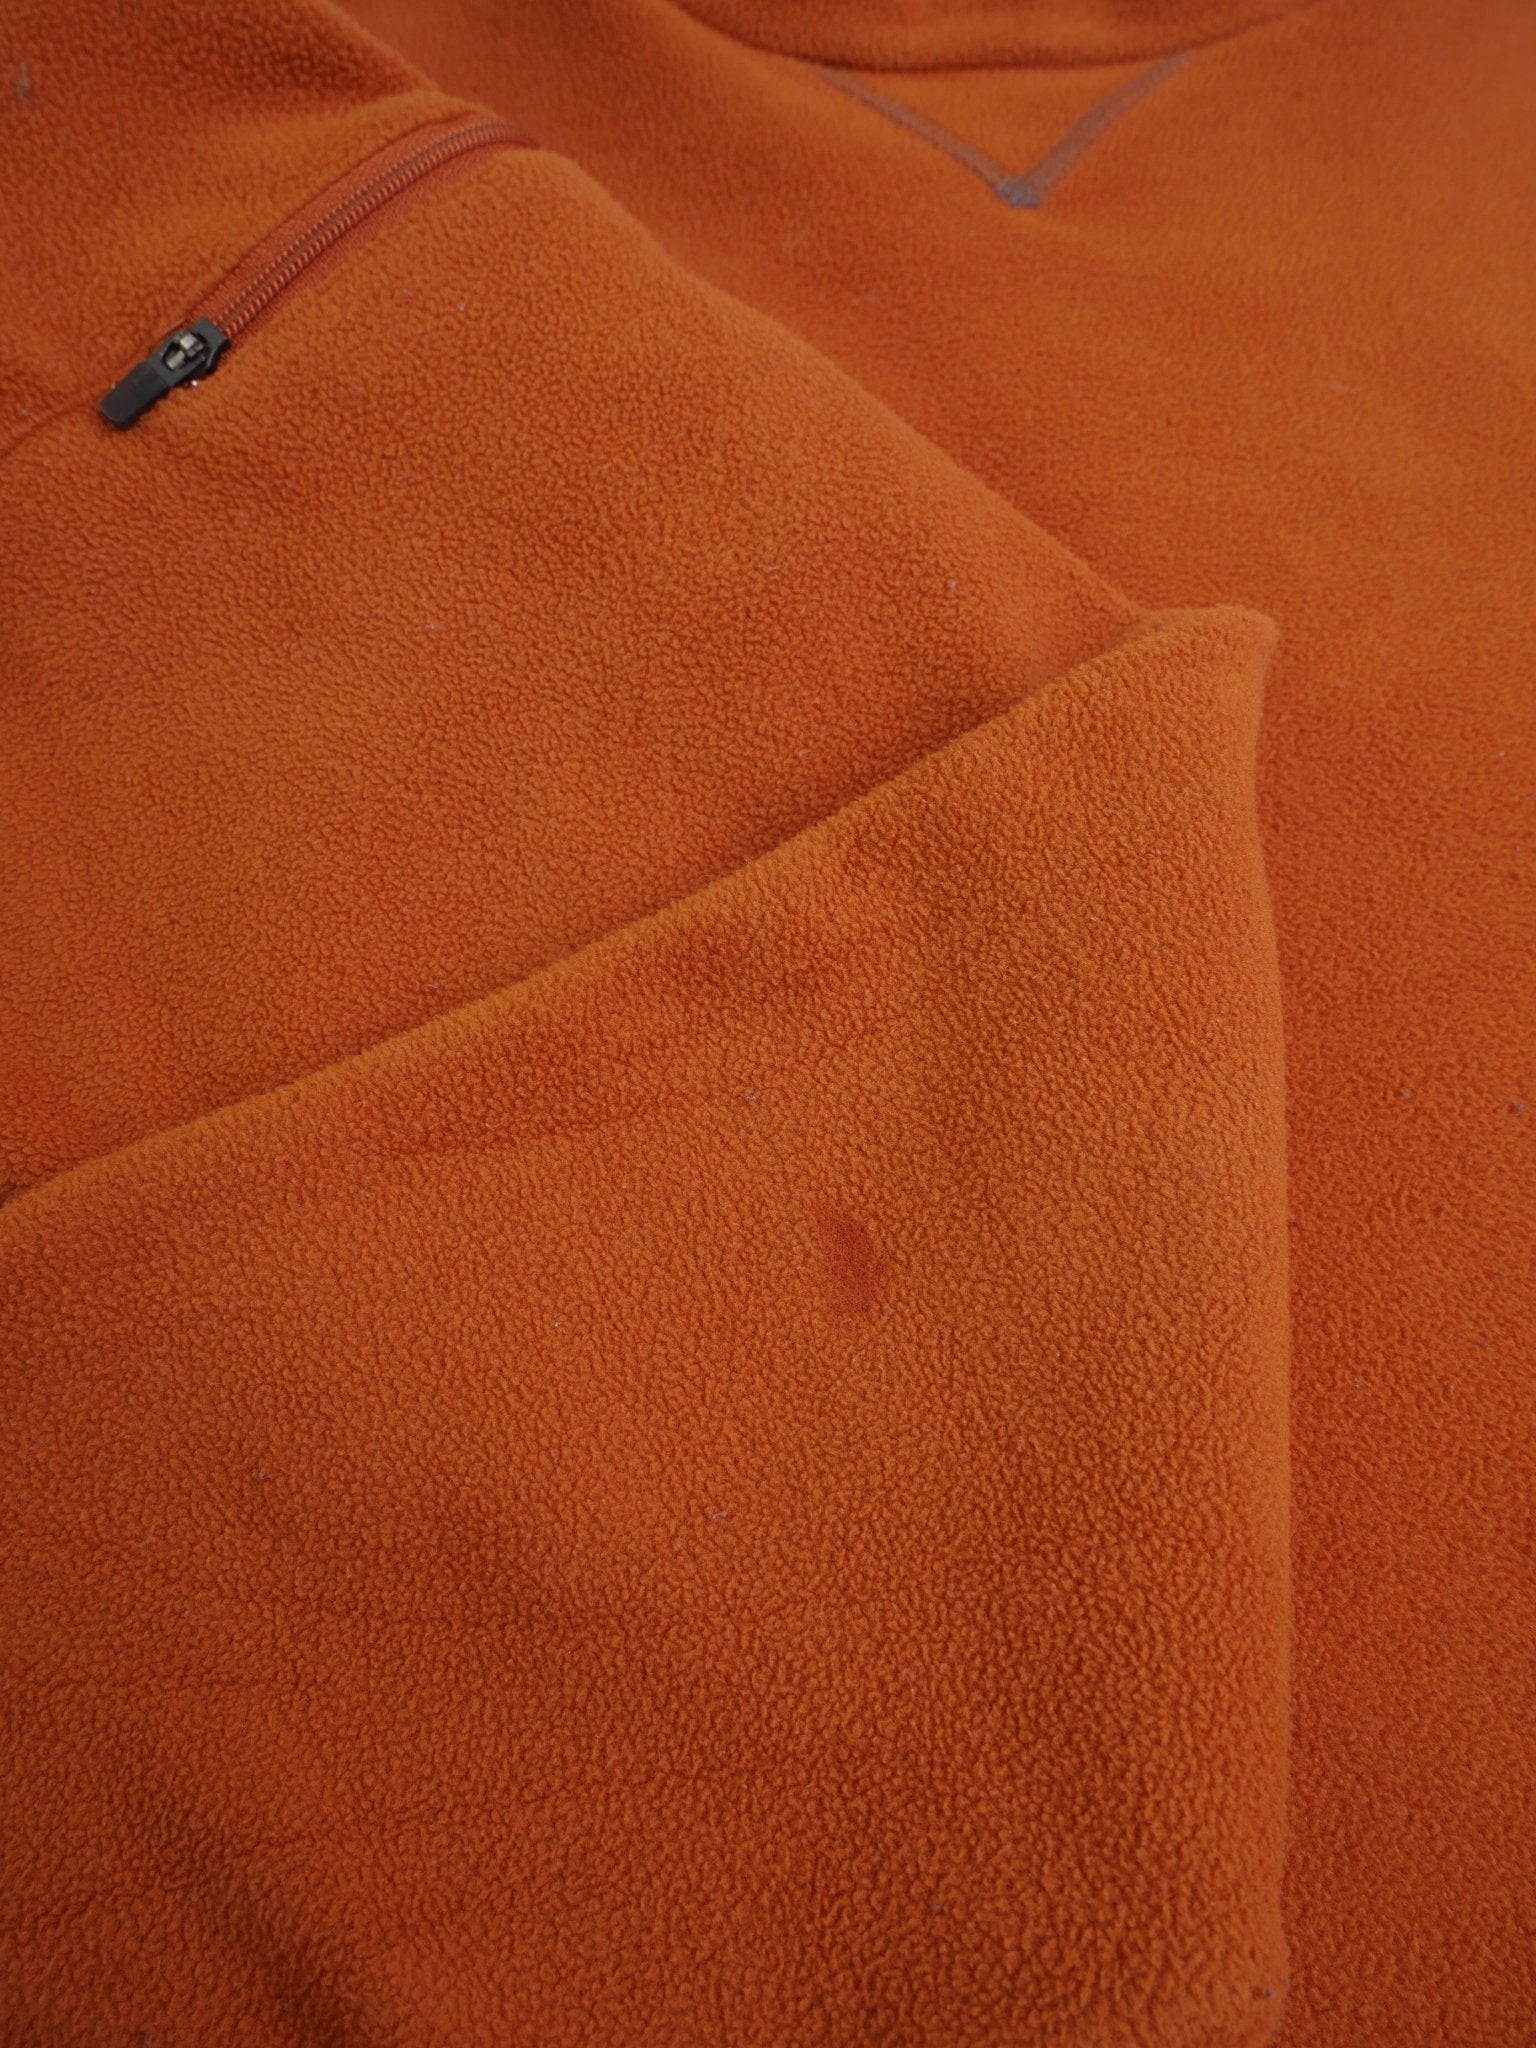 Nike ACG embroidered Logo washed orange Fleece Sweater - Peeces